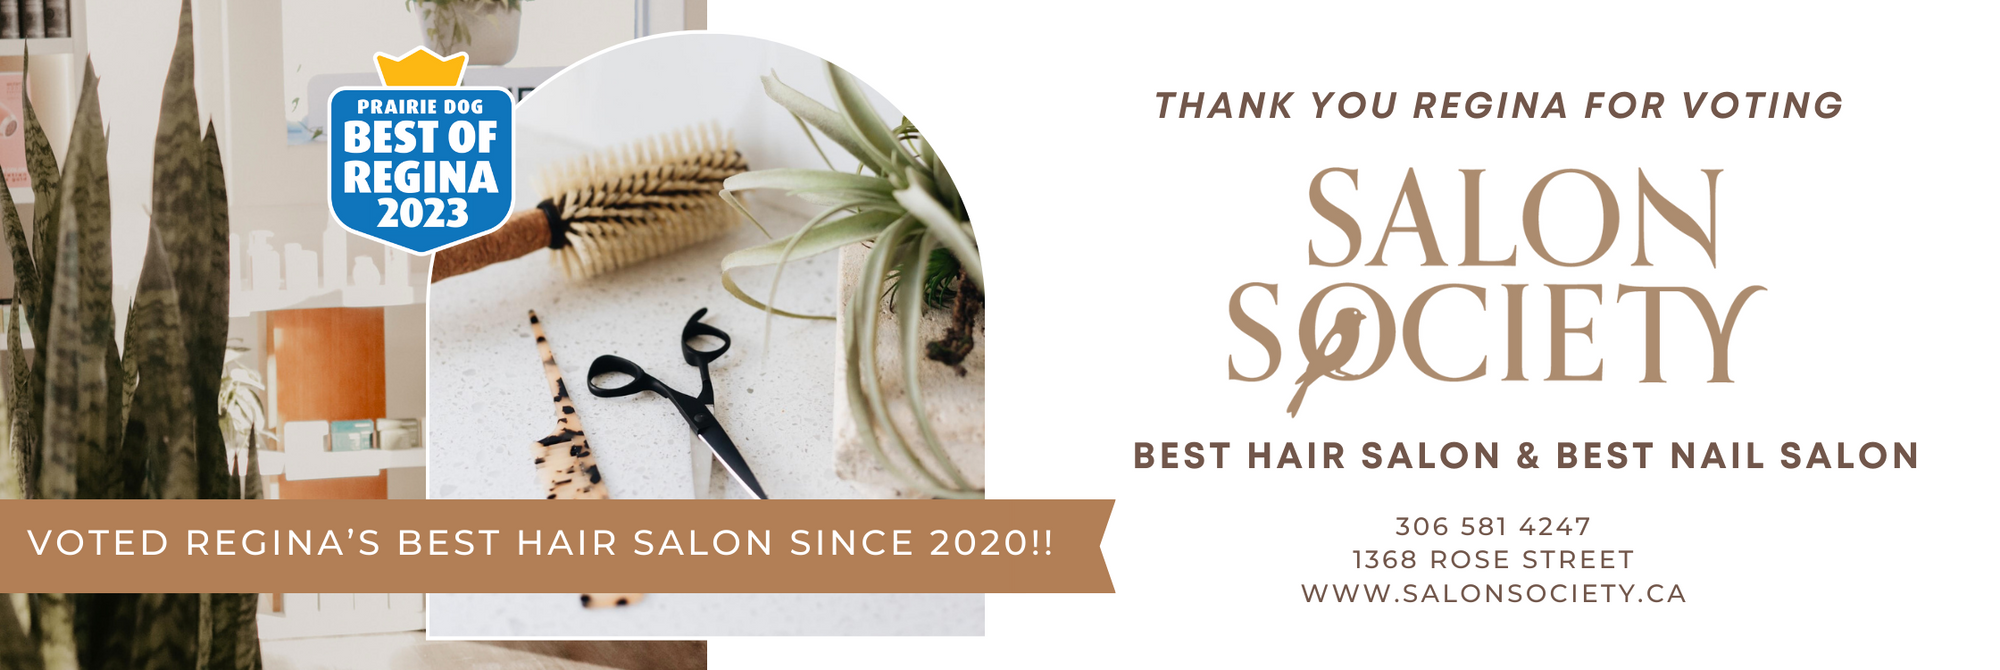 Salon Society - Voted Regina's Best Hair Salon Since 2020!! - Best Hair Salon & Best Nail Salon - 306-581-4247, 1368 Rose Street, Regina, www.salonsociety.ca